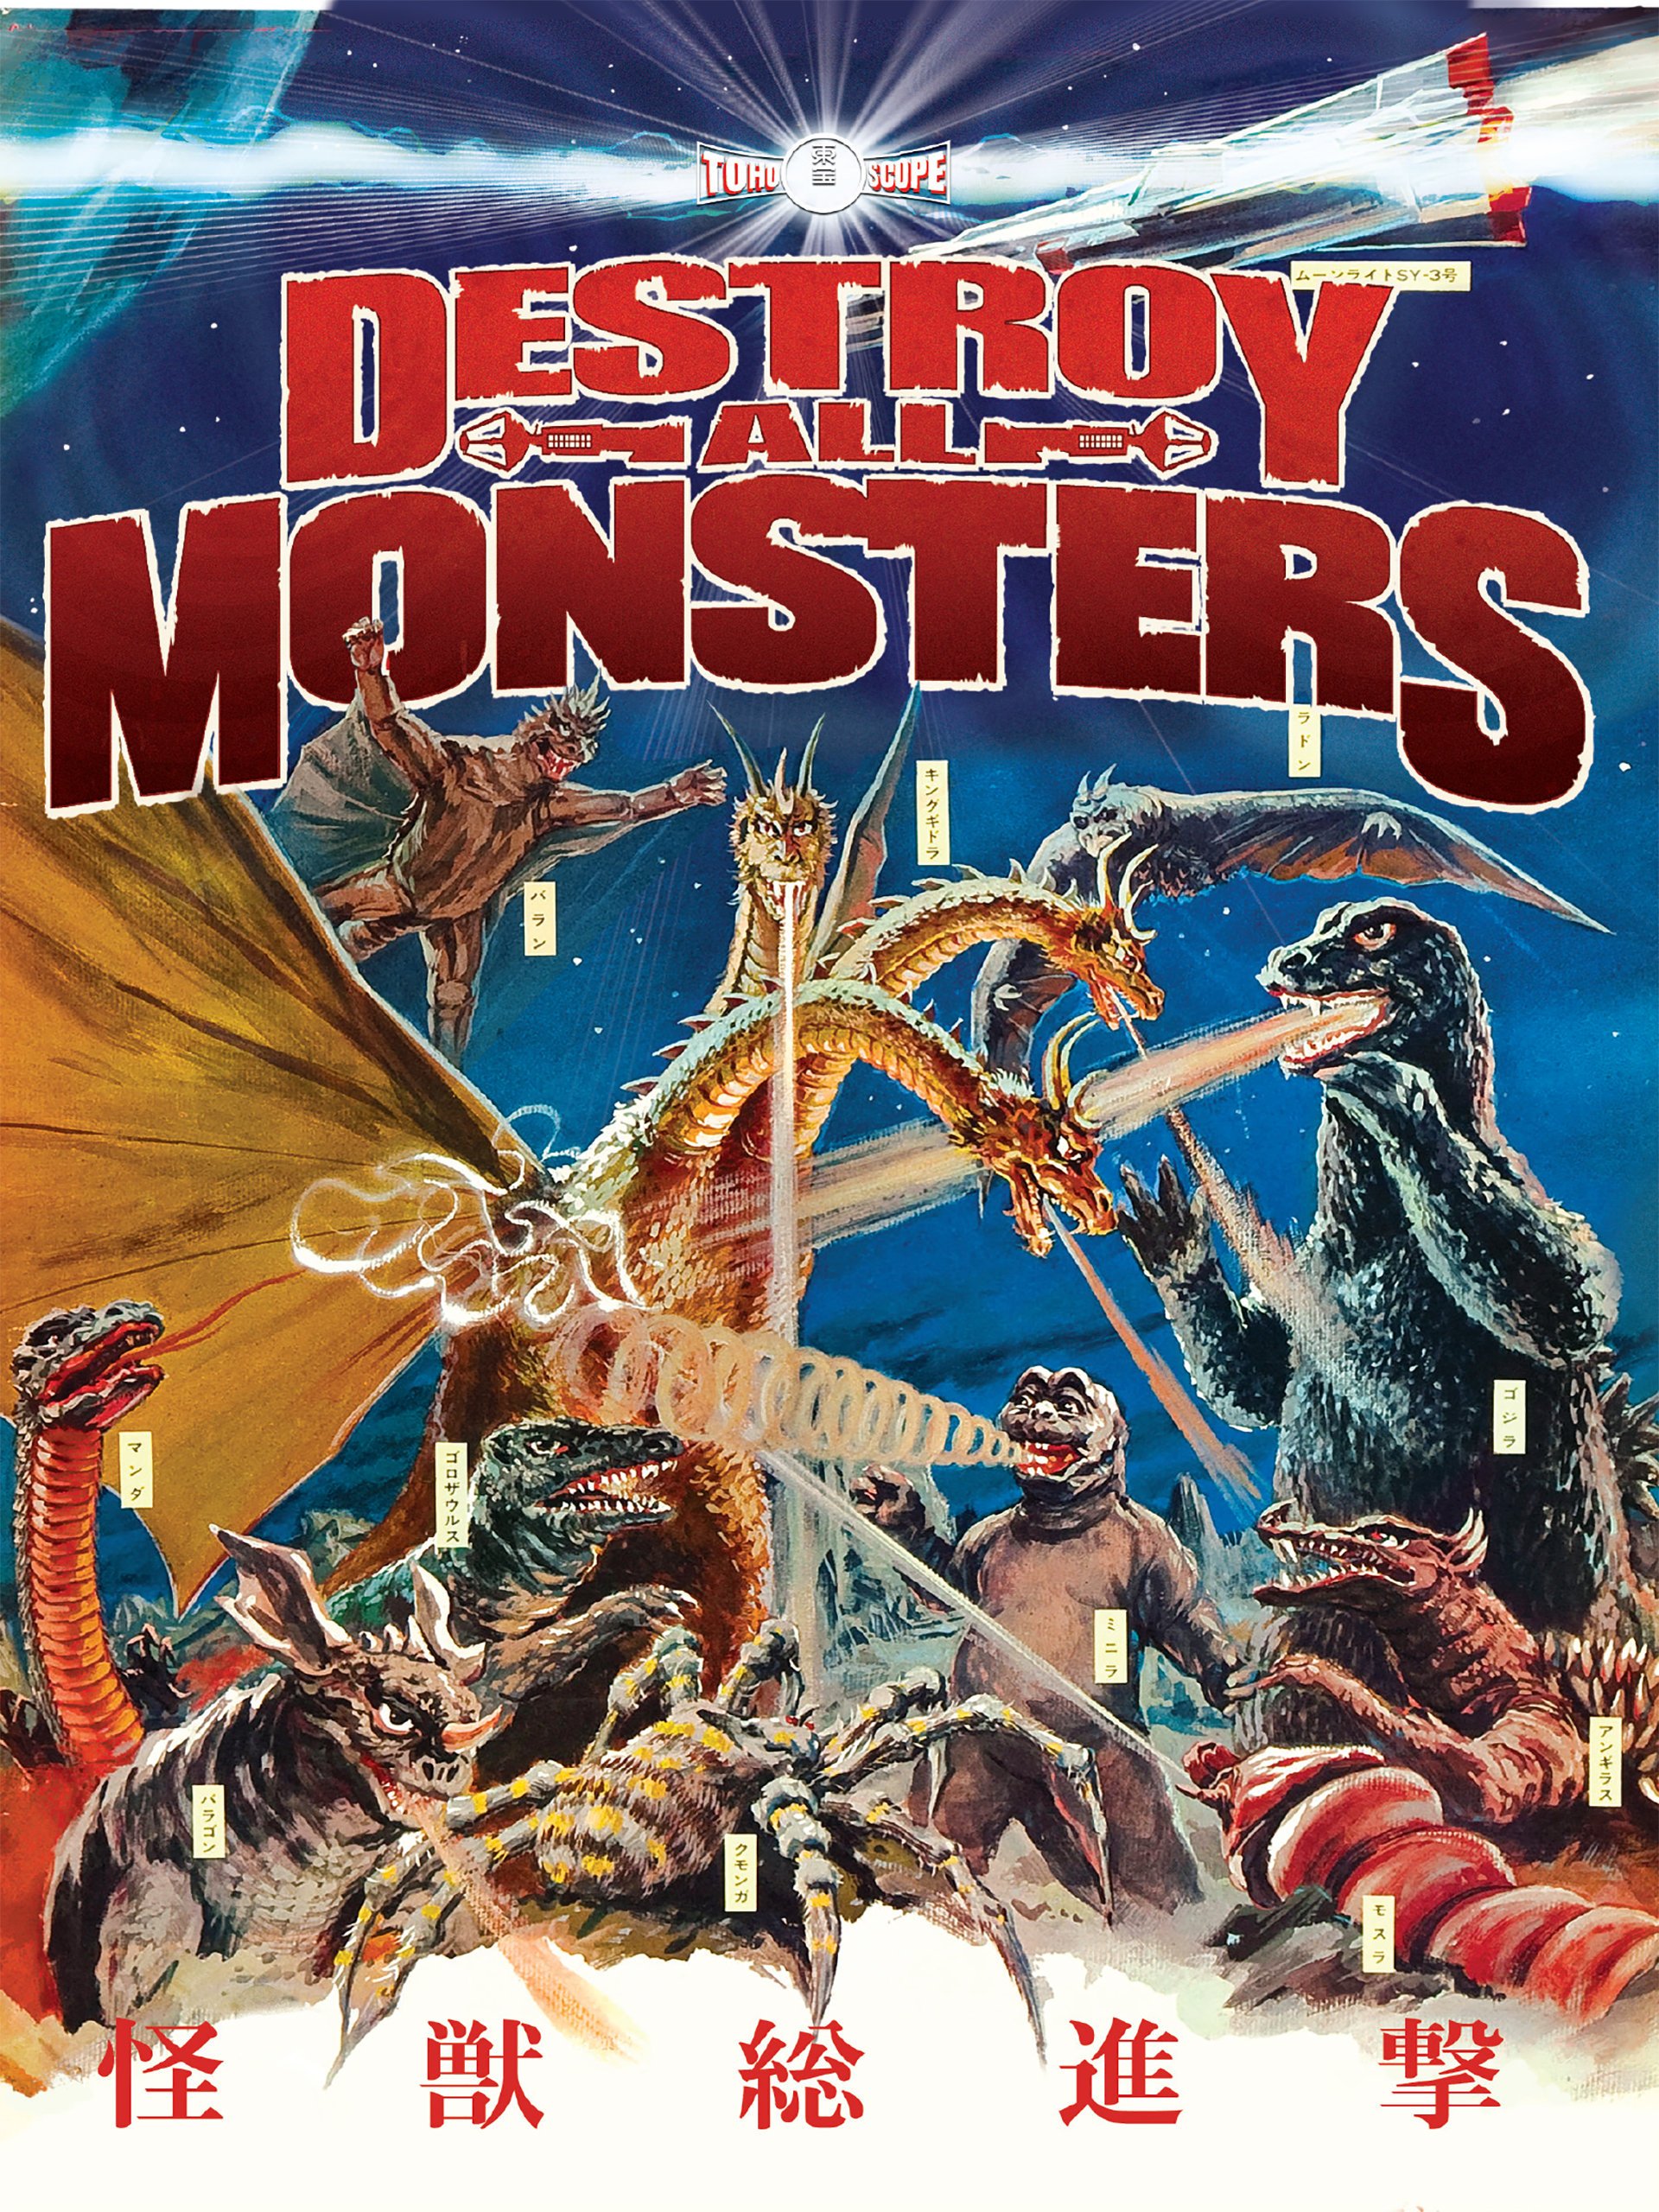 Destroy All Monsters (1968) starring Godzilla, Rodan, Mothra, King Ghidora